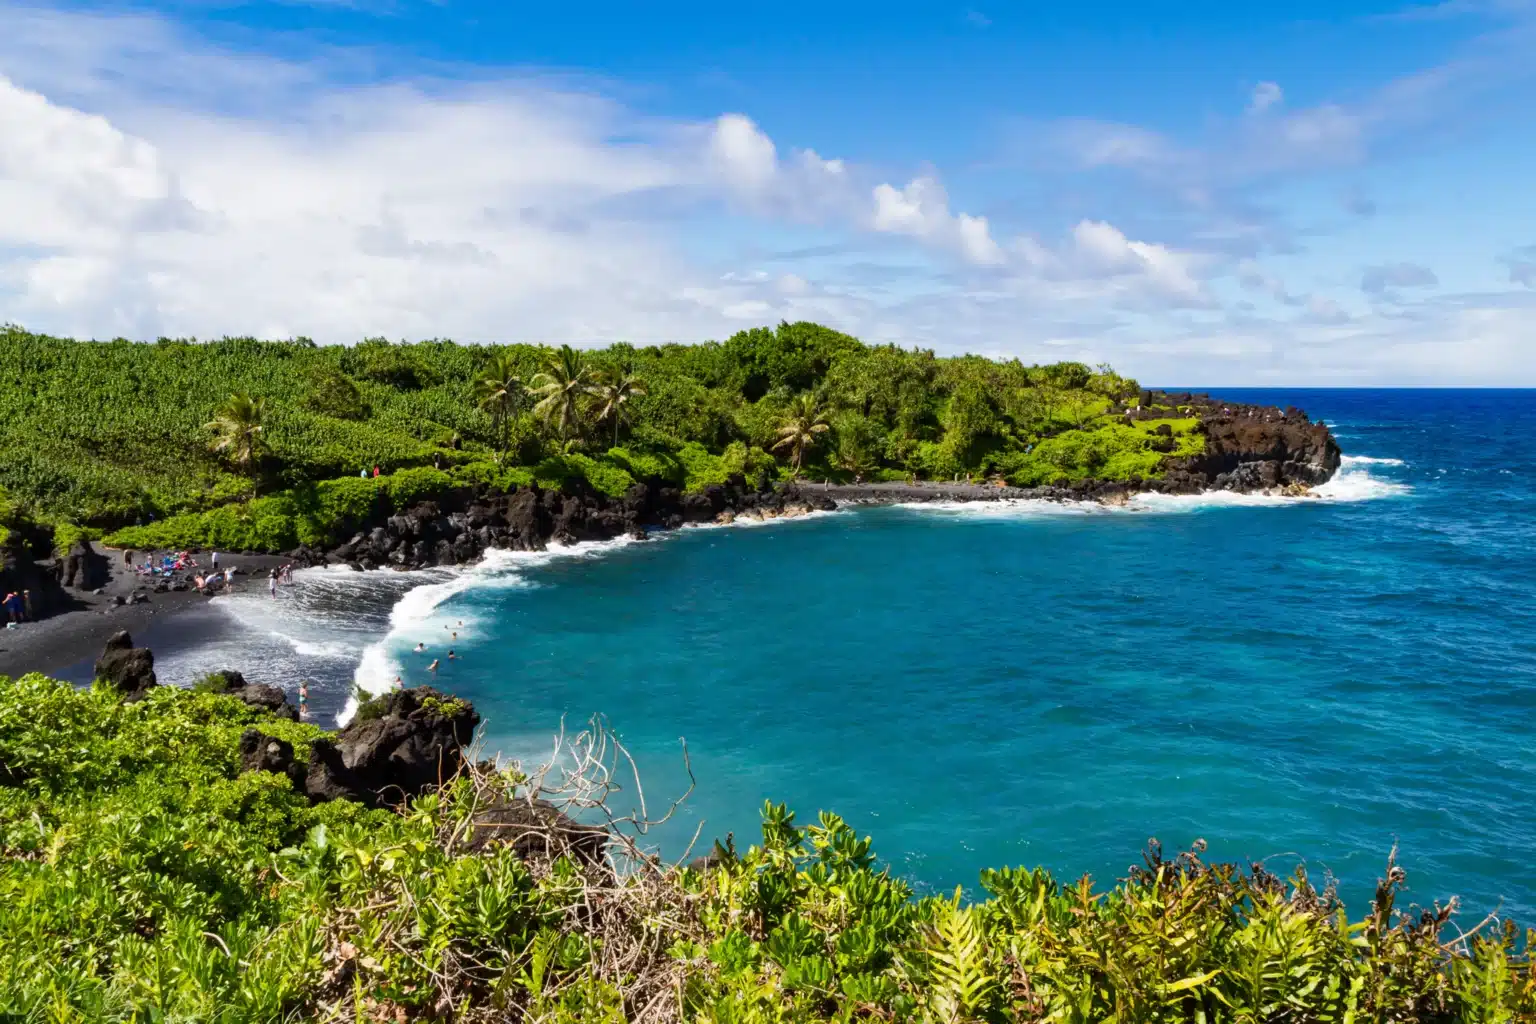 Wai'anapanapa Black Sand Beach: Beach Attraction in the town of Hana on Maui